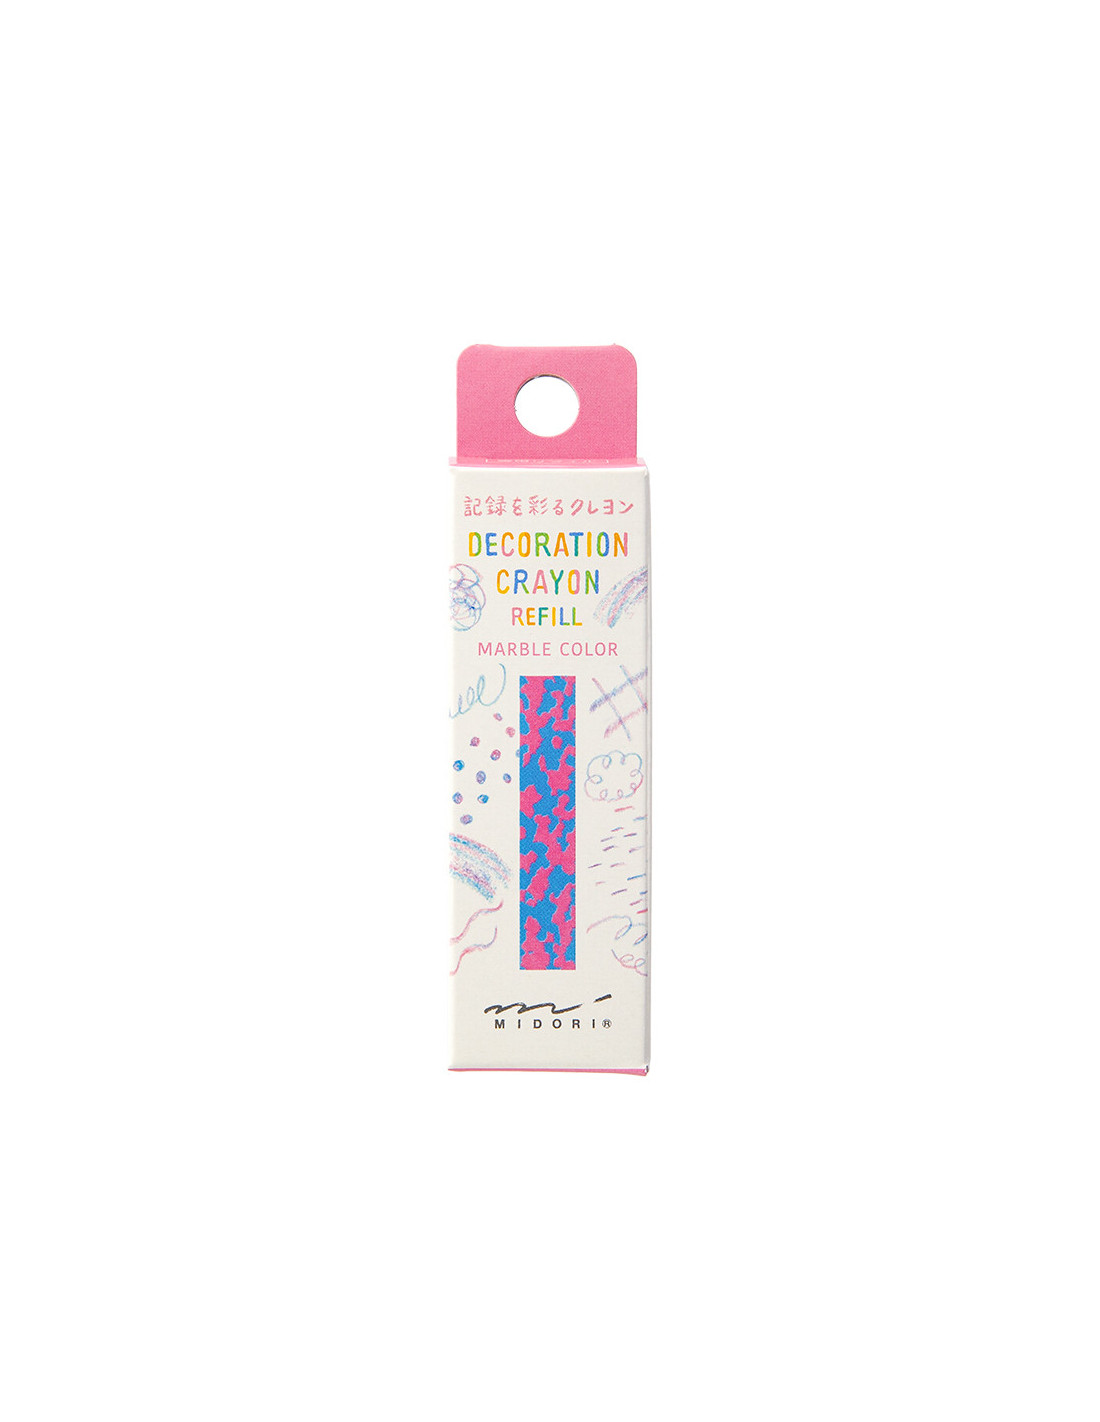 Midori Decoration Crayon Refill - Marble Color - Pink & Light Blue